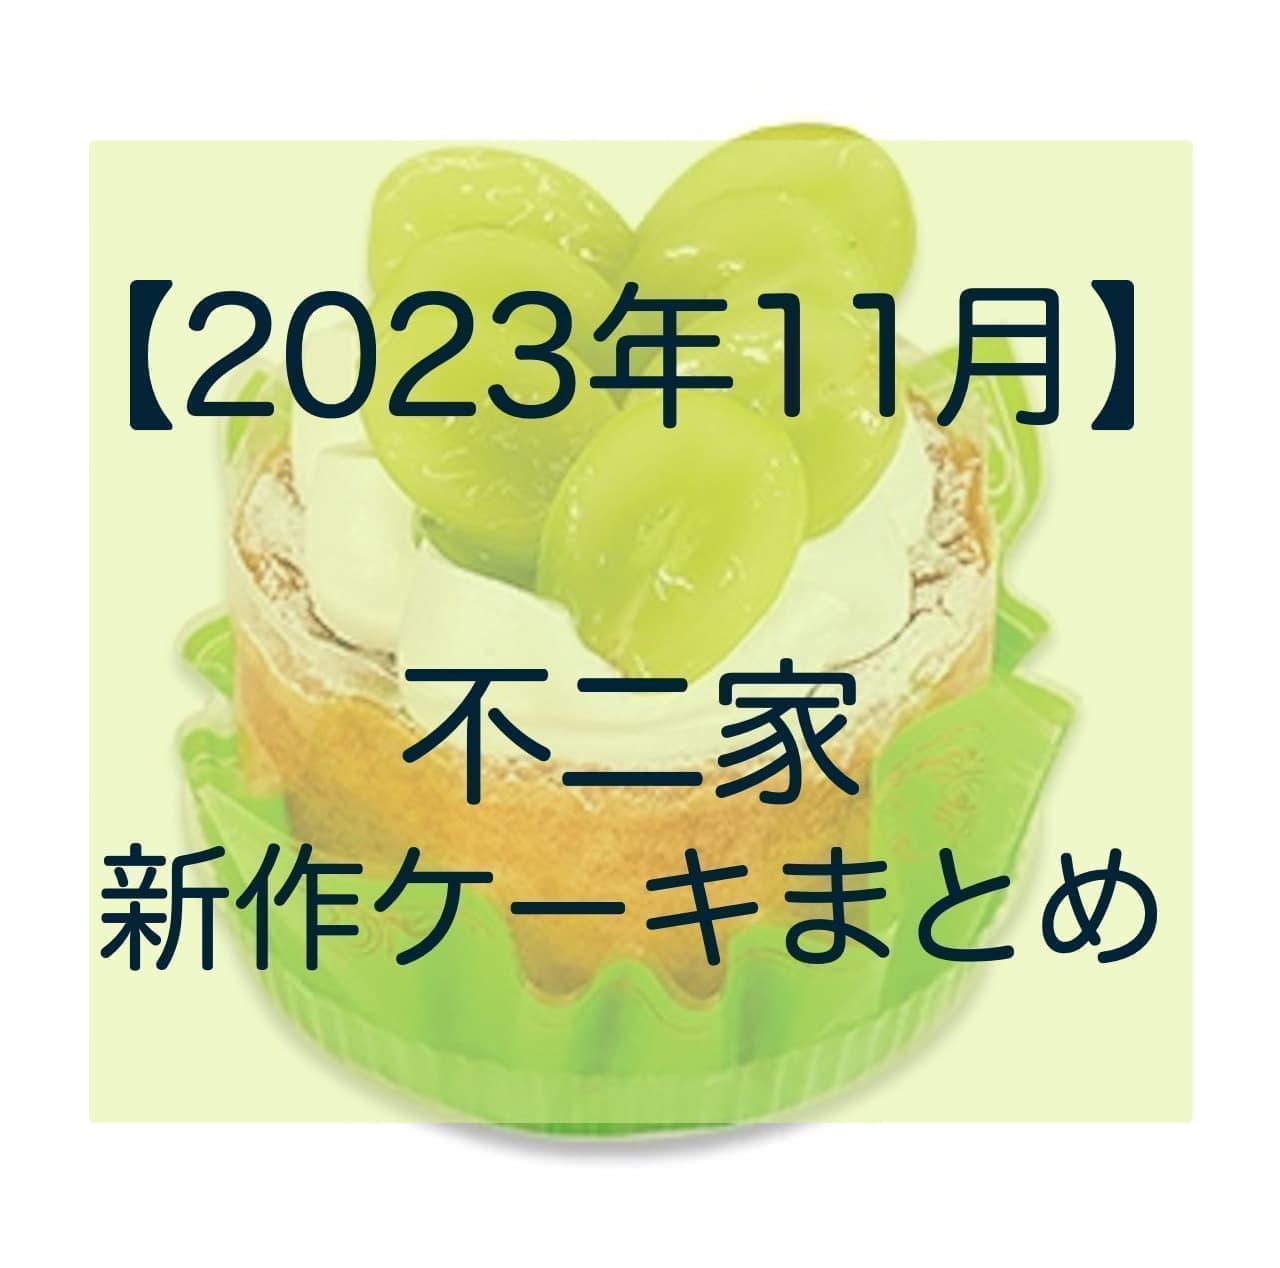 2023 November Fujiya New Cake Summary